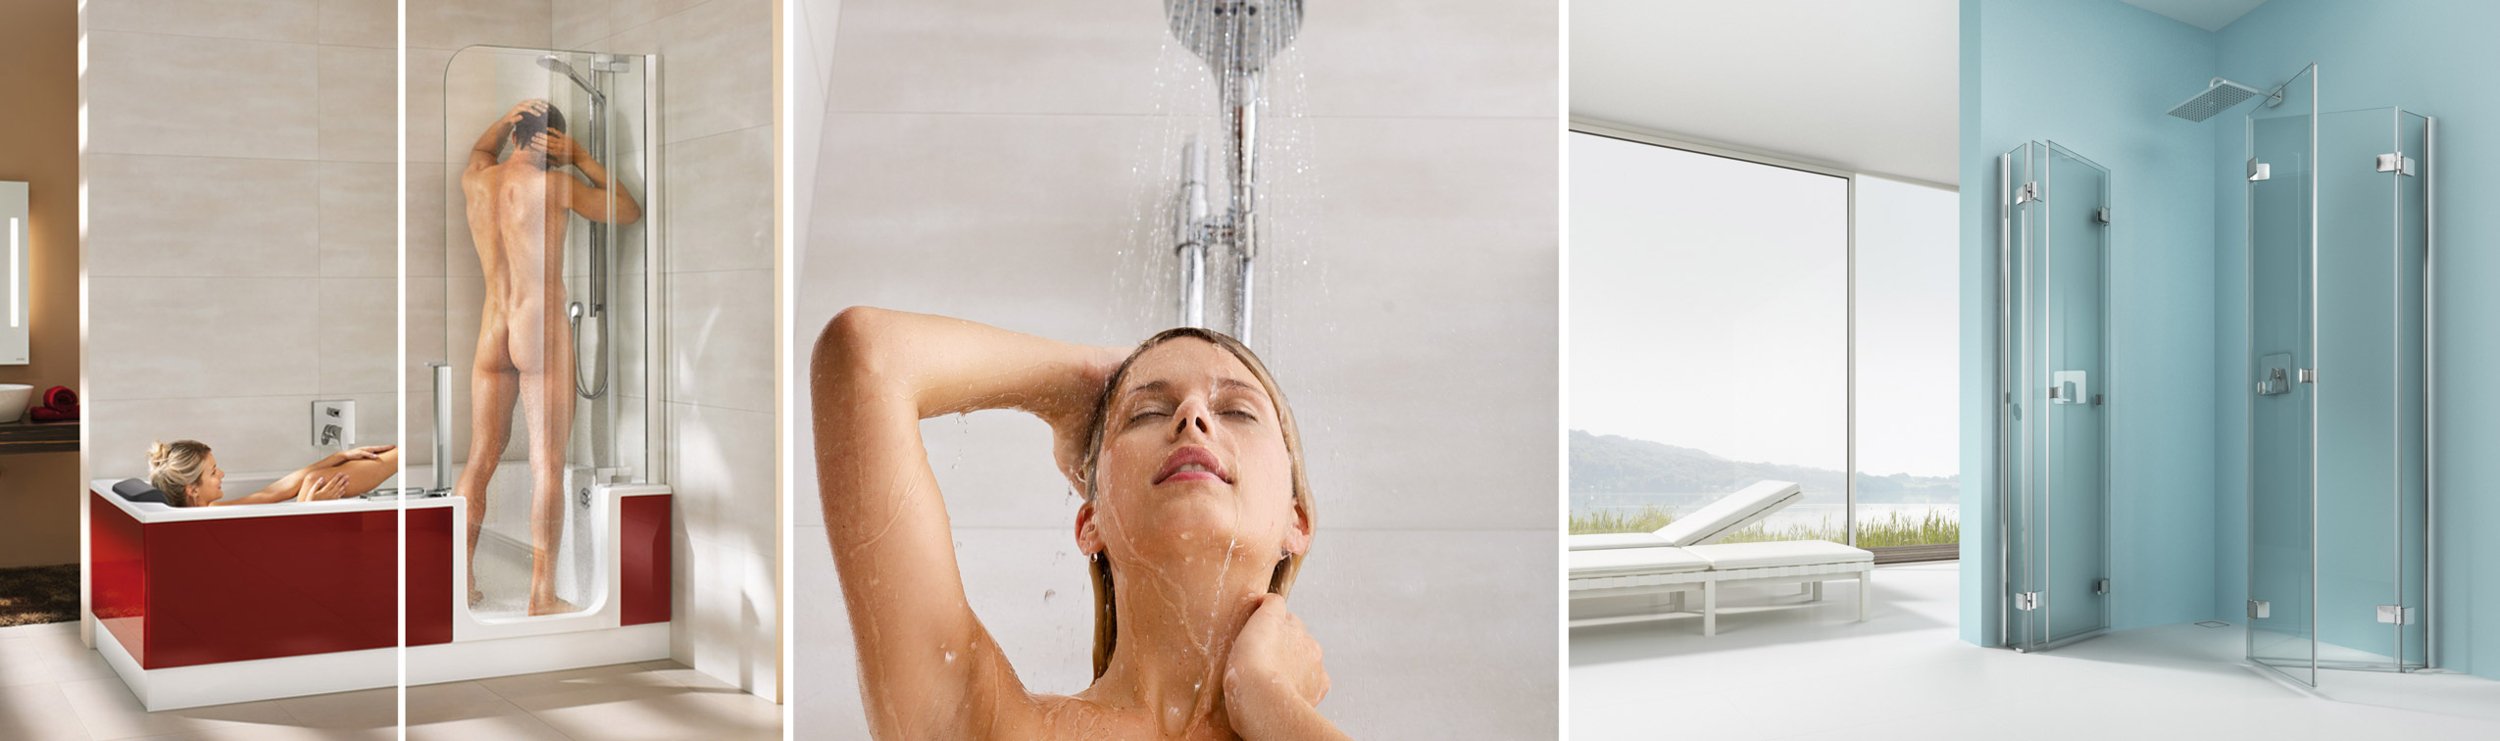 Douches en baden zonder barrières | © Artweger GmbH. & Co. KG